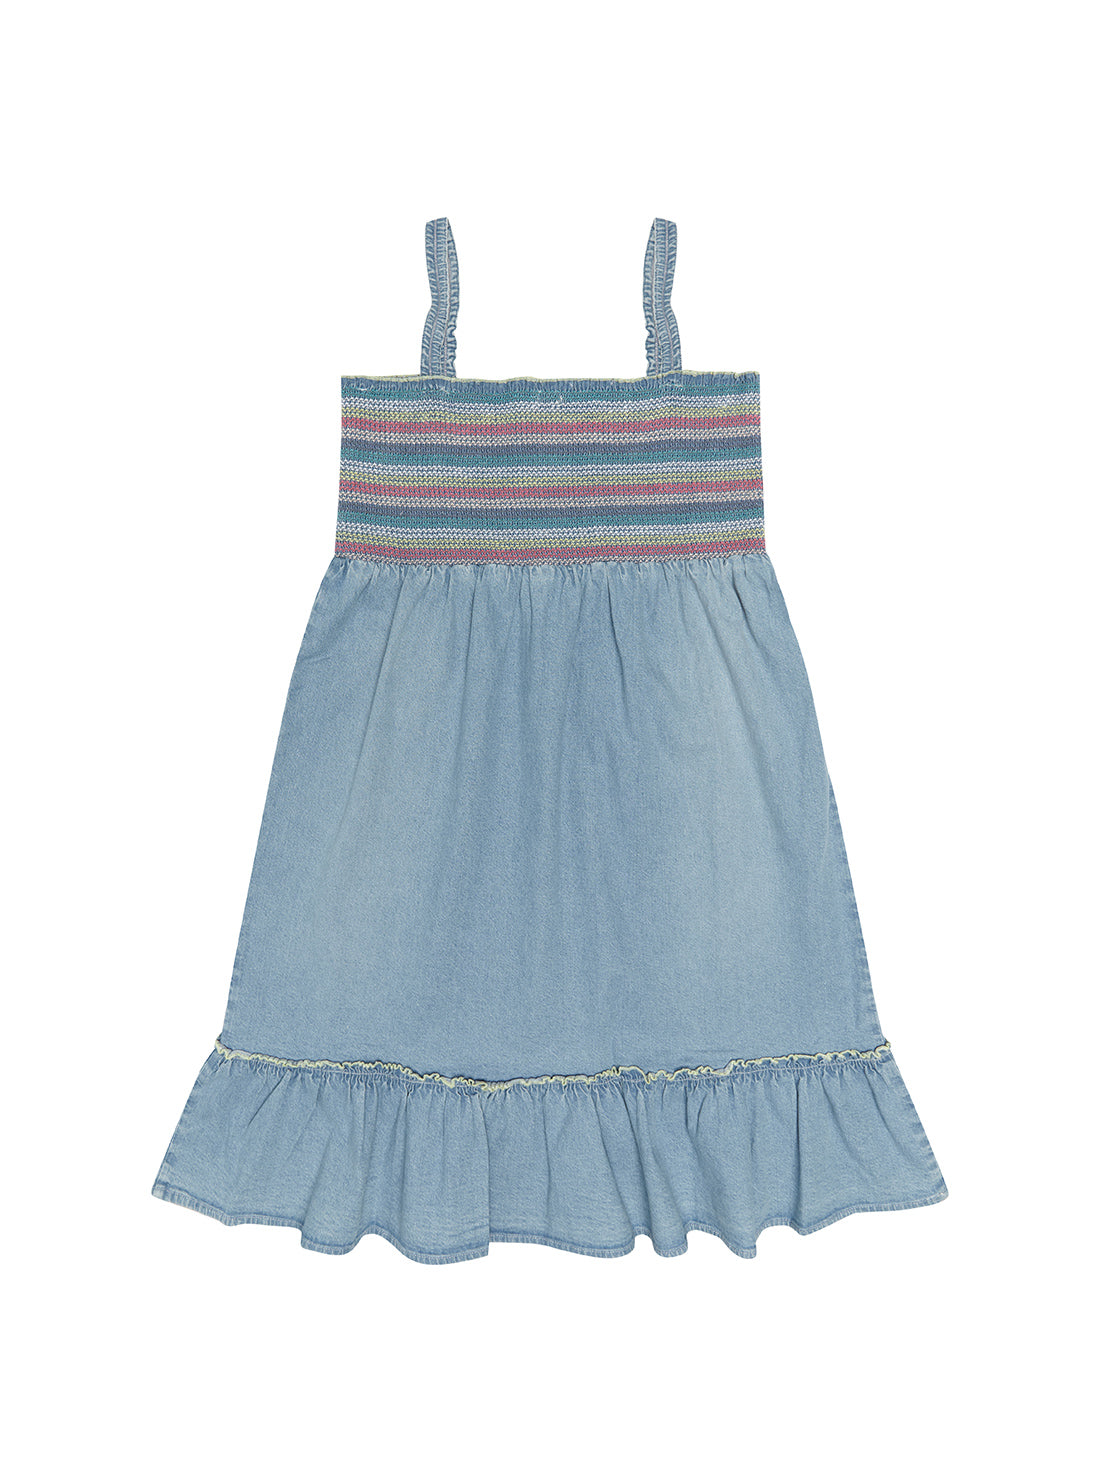 Girl's Light Blue Wash Denim Stretch Dress back view